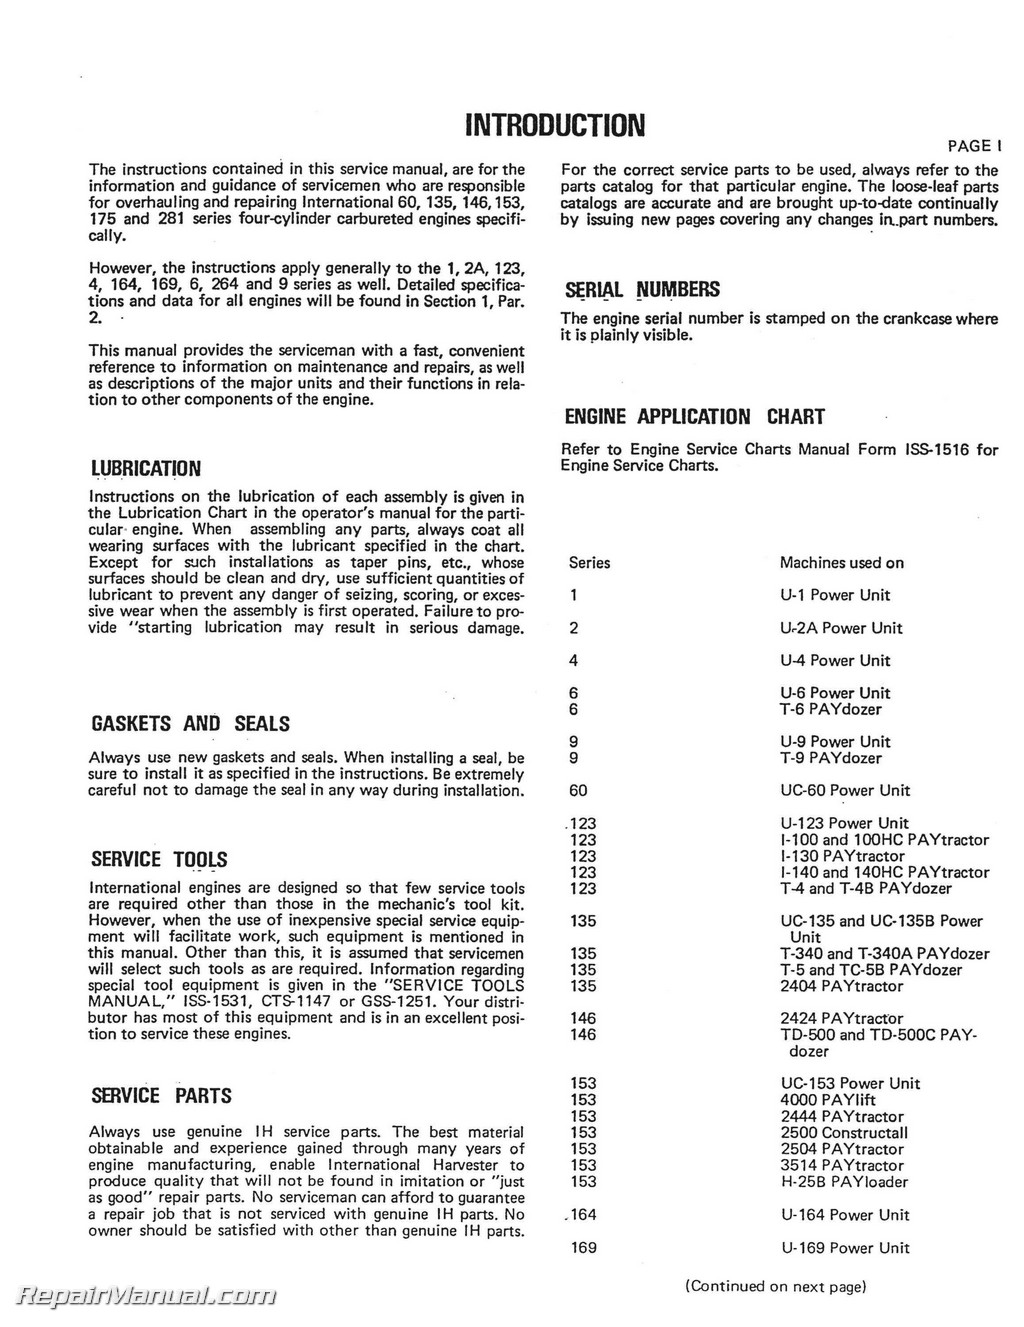 International IH FARMALL Model A Servicemans Shop Service Guide manual 